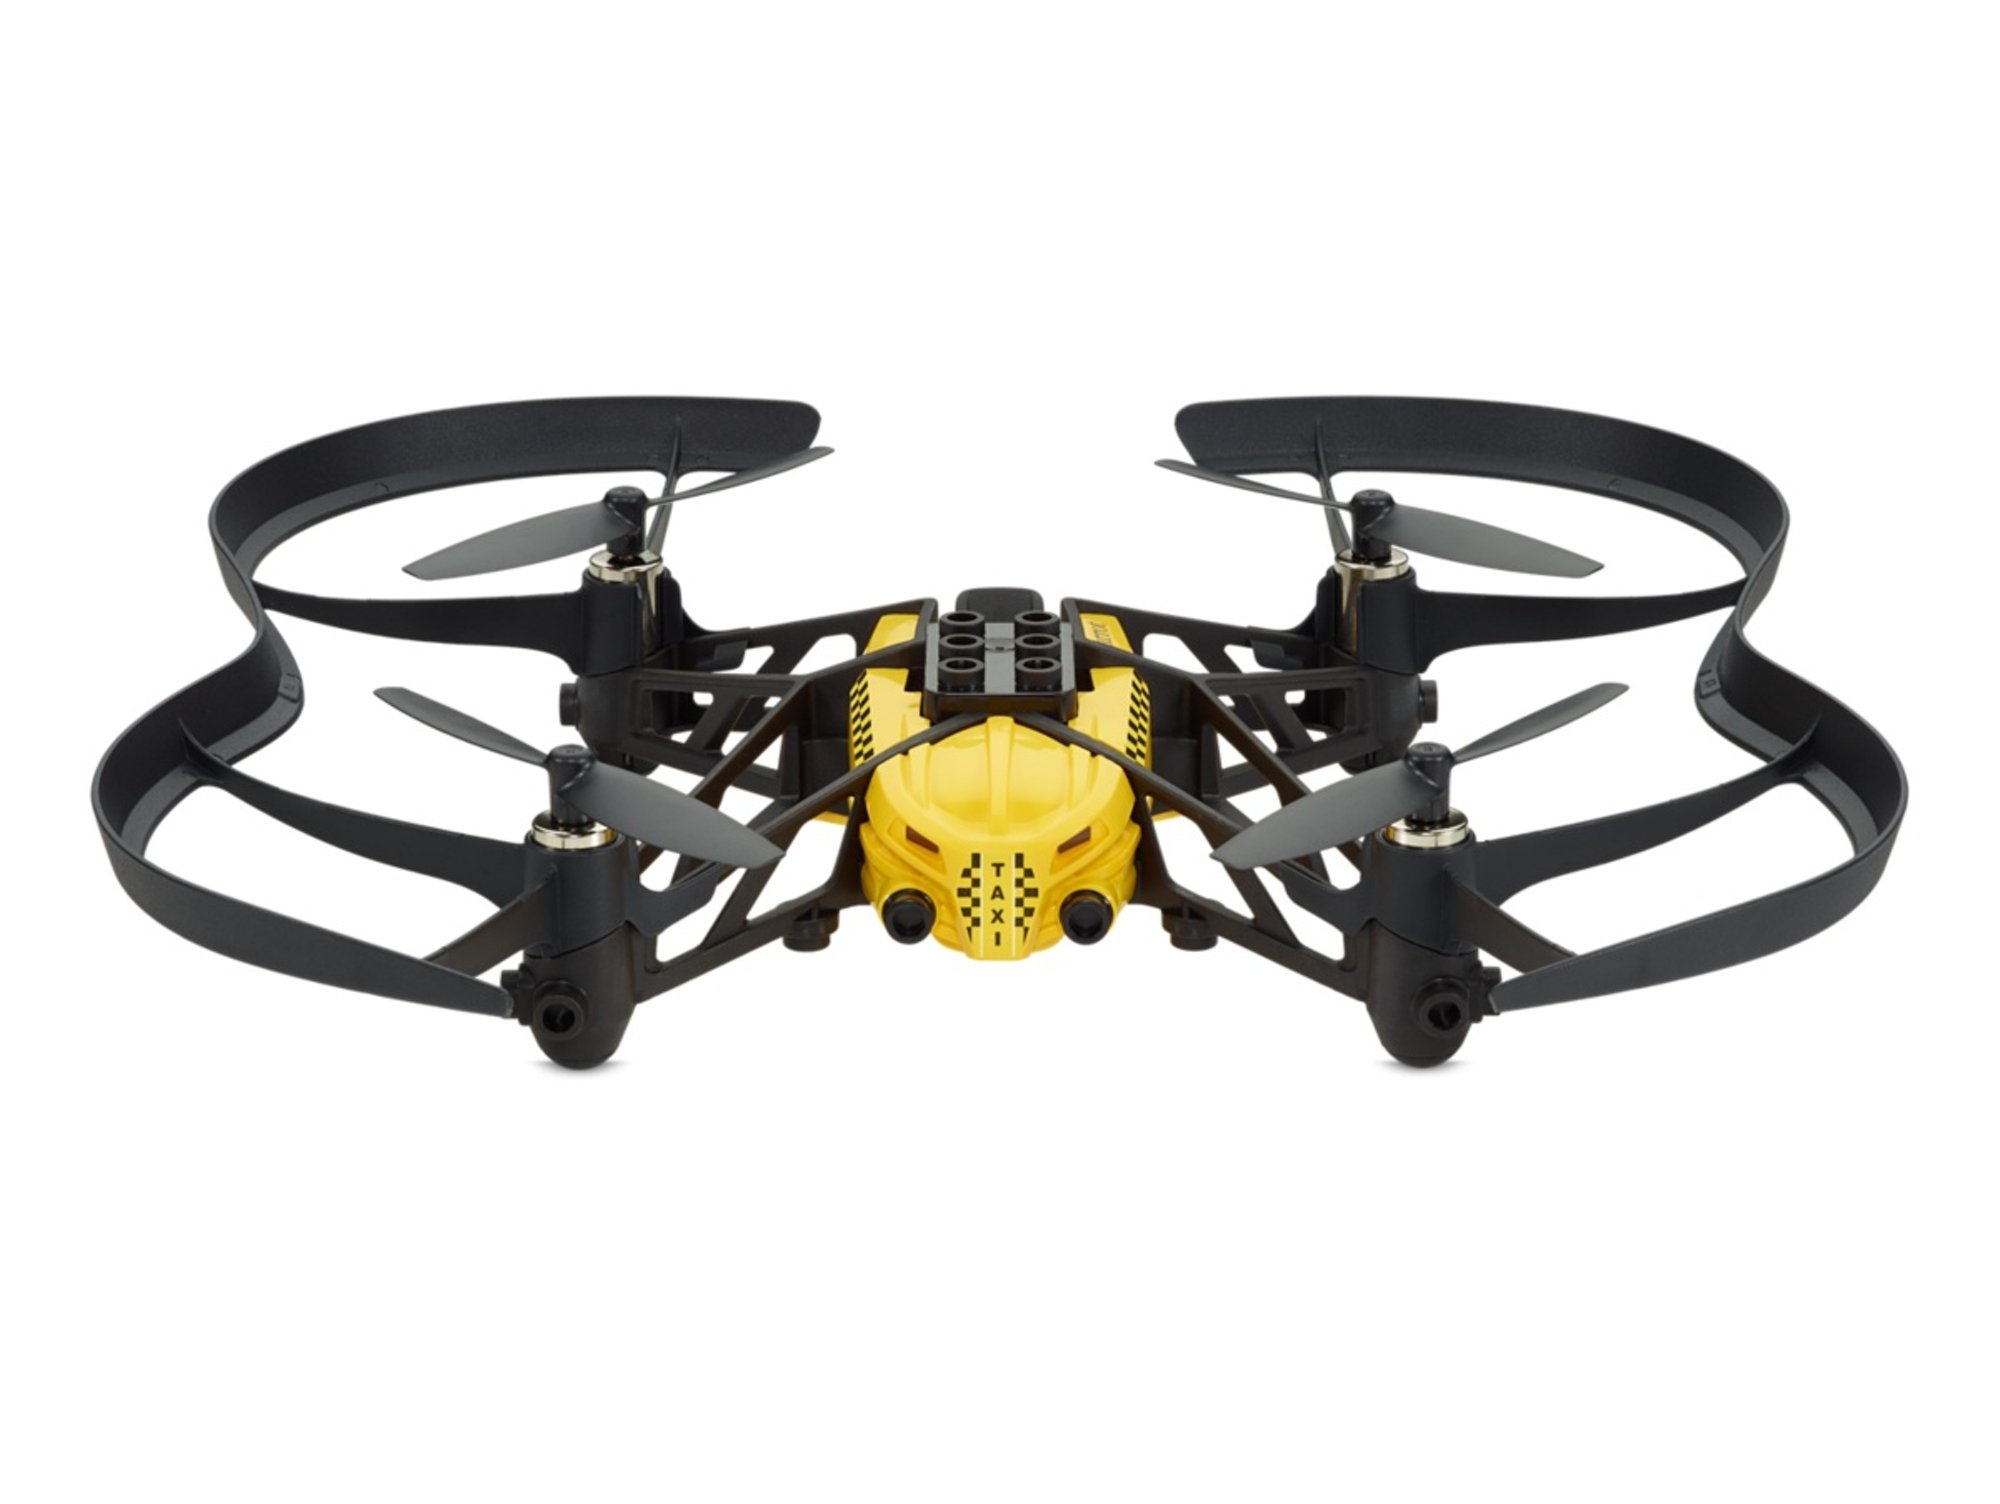 Drone Parrot Airbone cargo travis amarillo airborne con negro 480 x 640 pixeles 20 4 motores takeoff pf723300aa